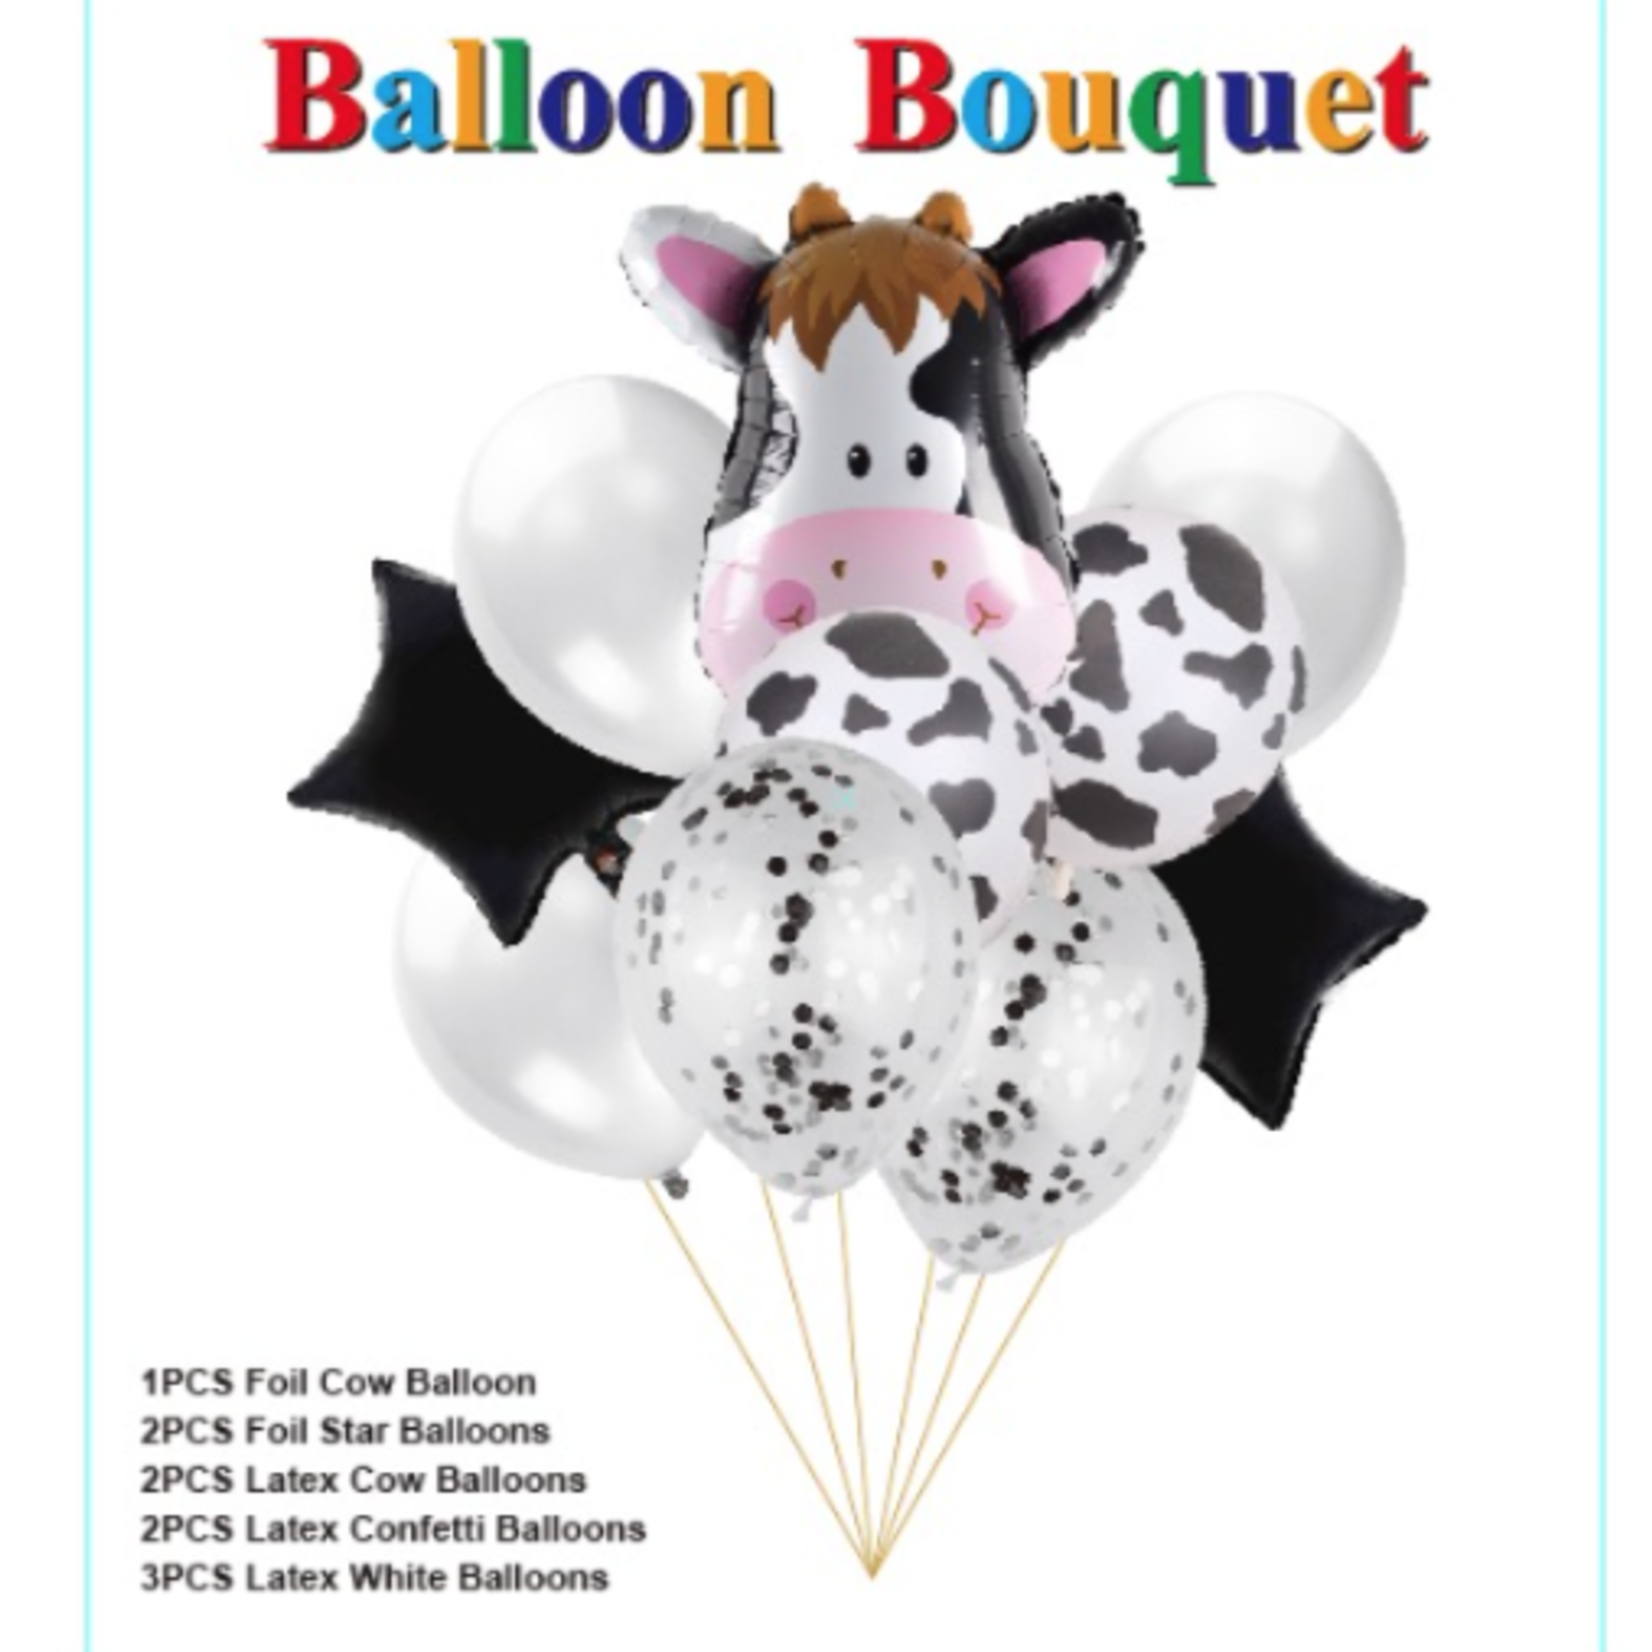 "COW" BALLOON BOUQUET reg $6.99